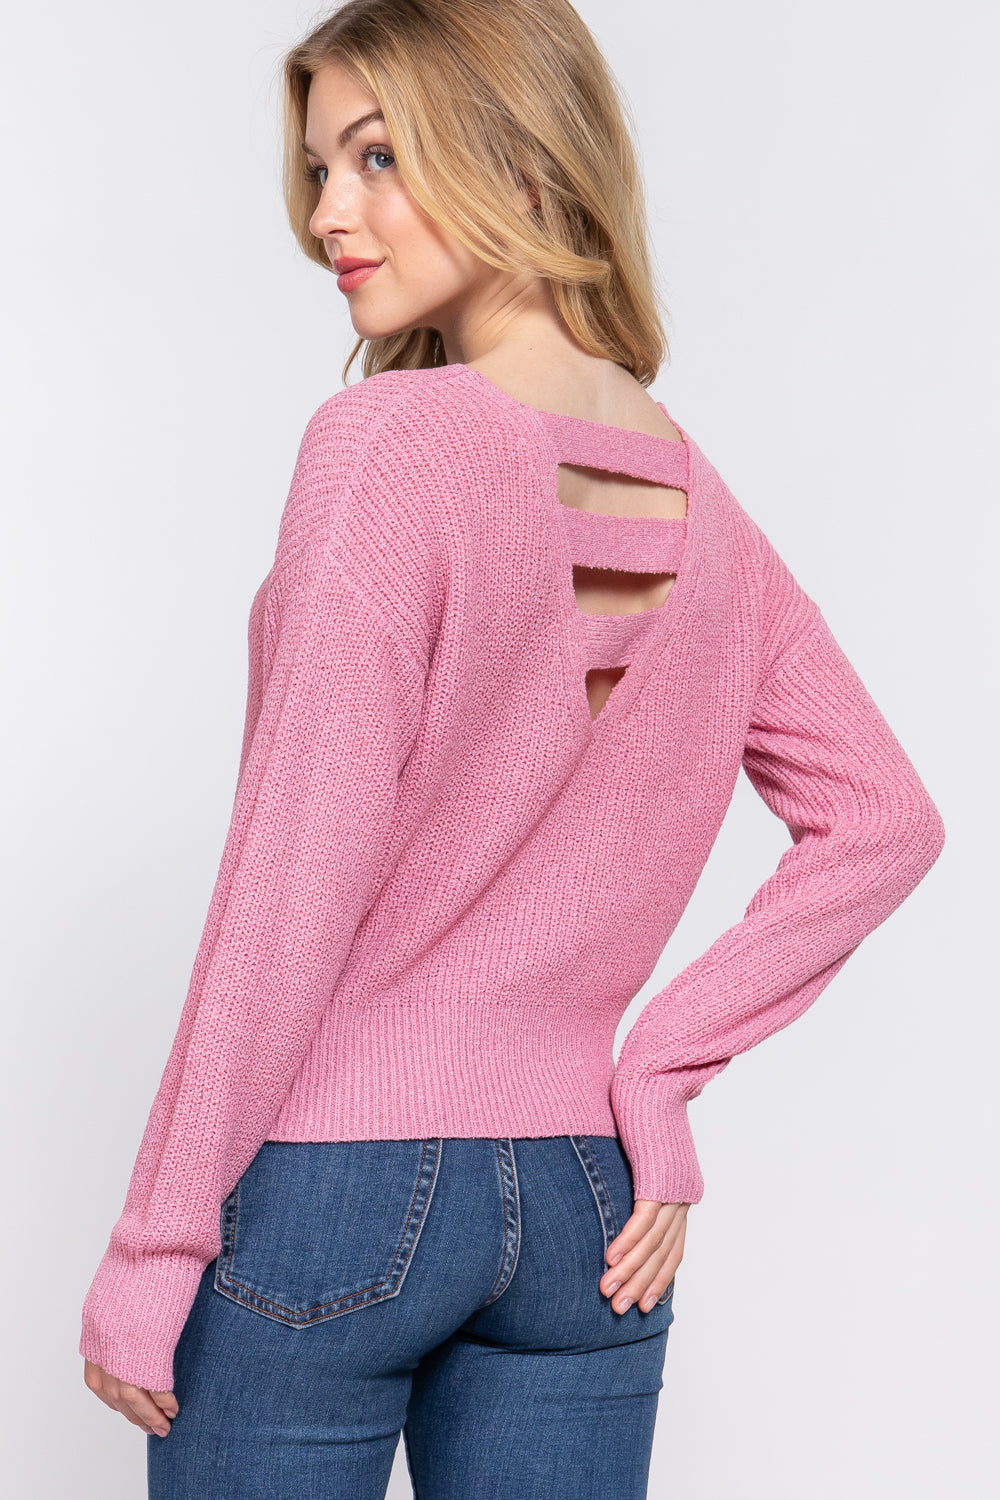 Dolman Slv Strappy Open Back Sweater - Love It Clothing